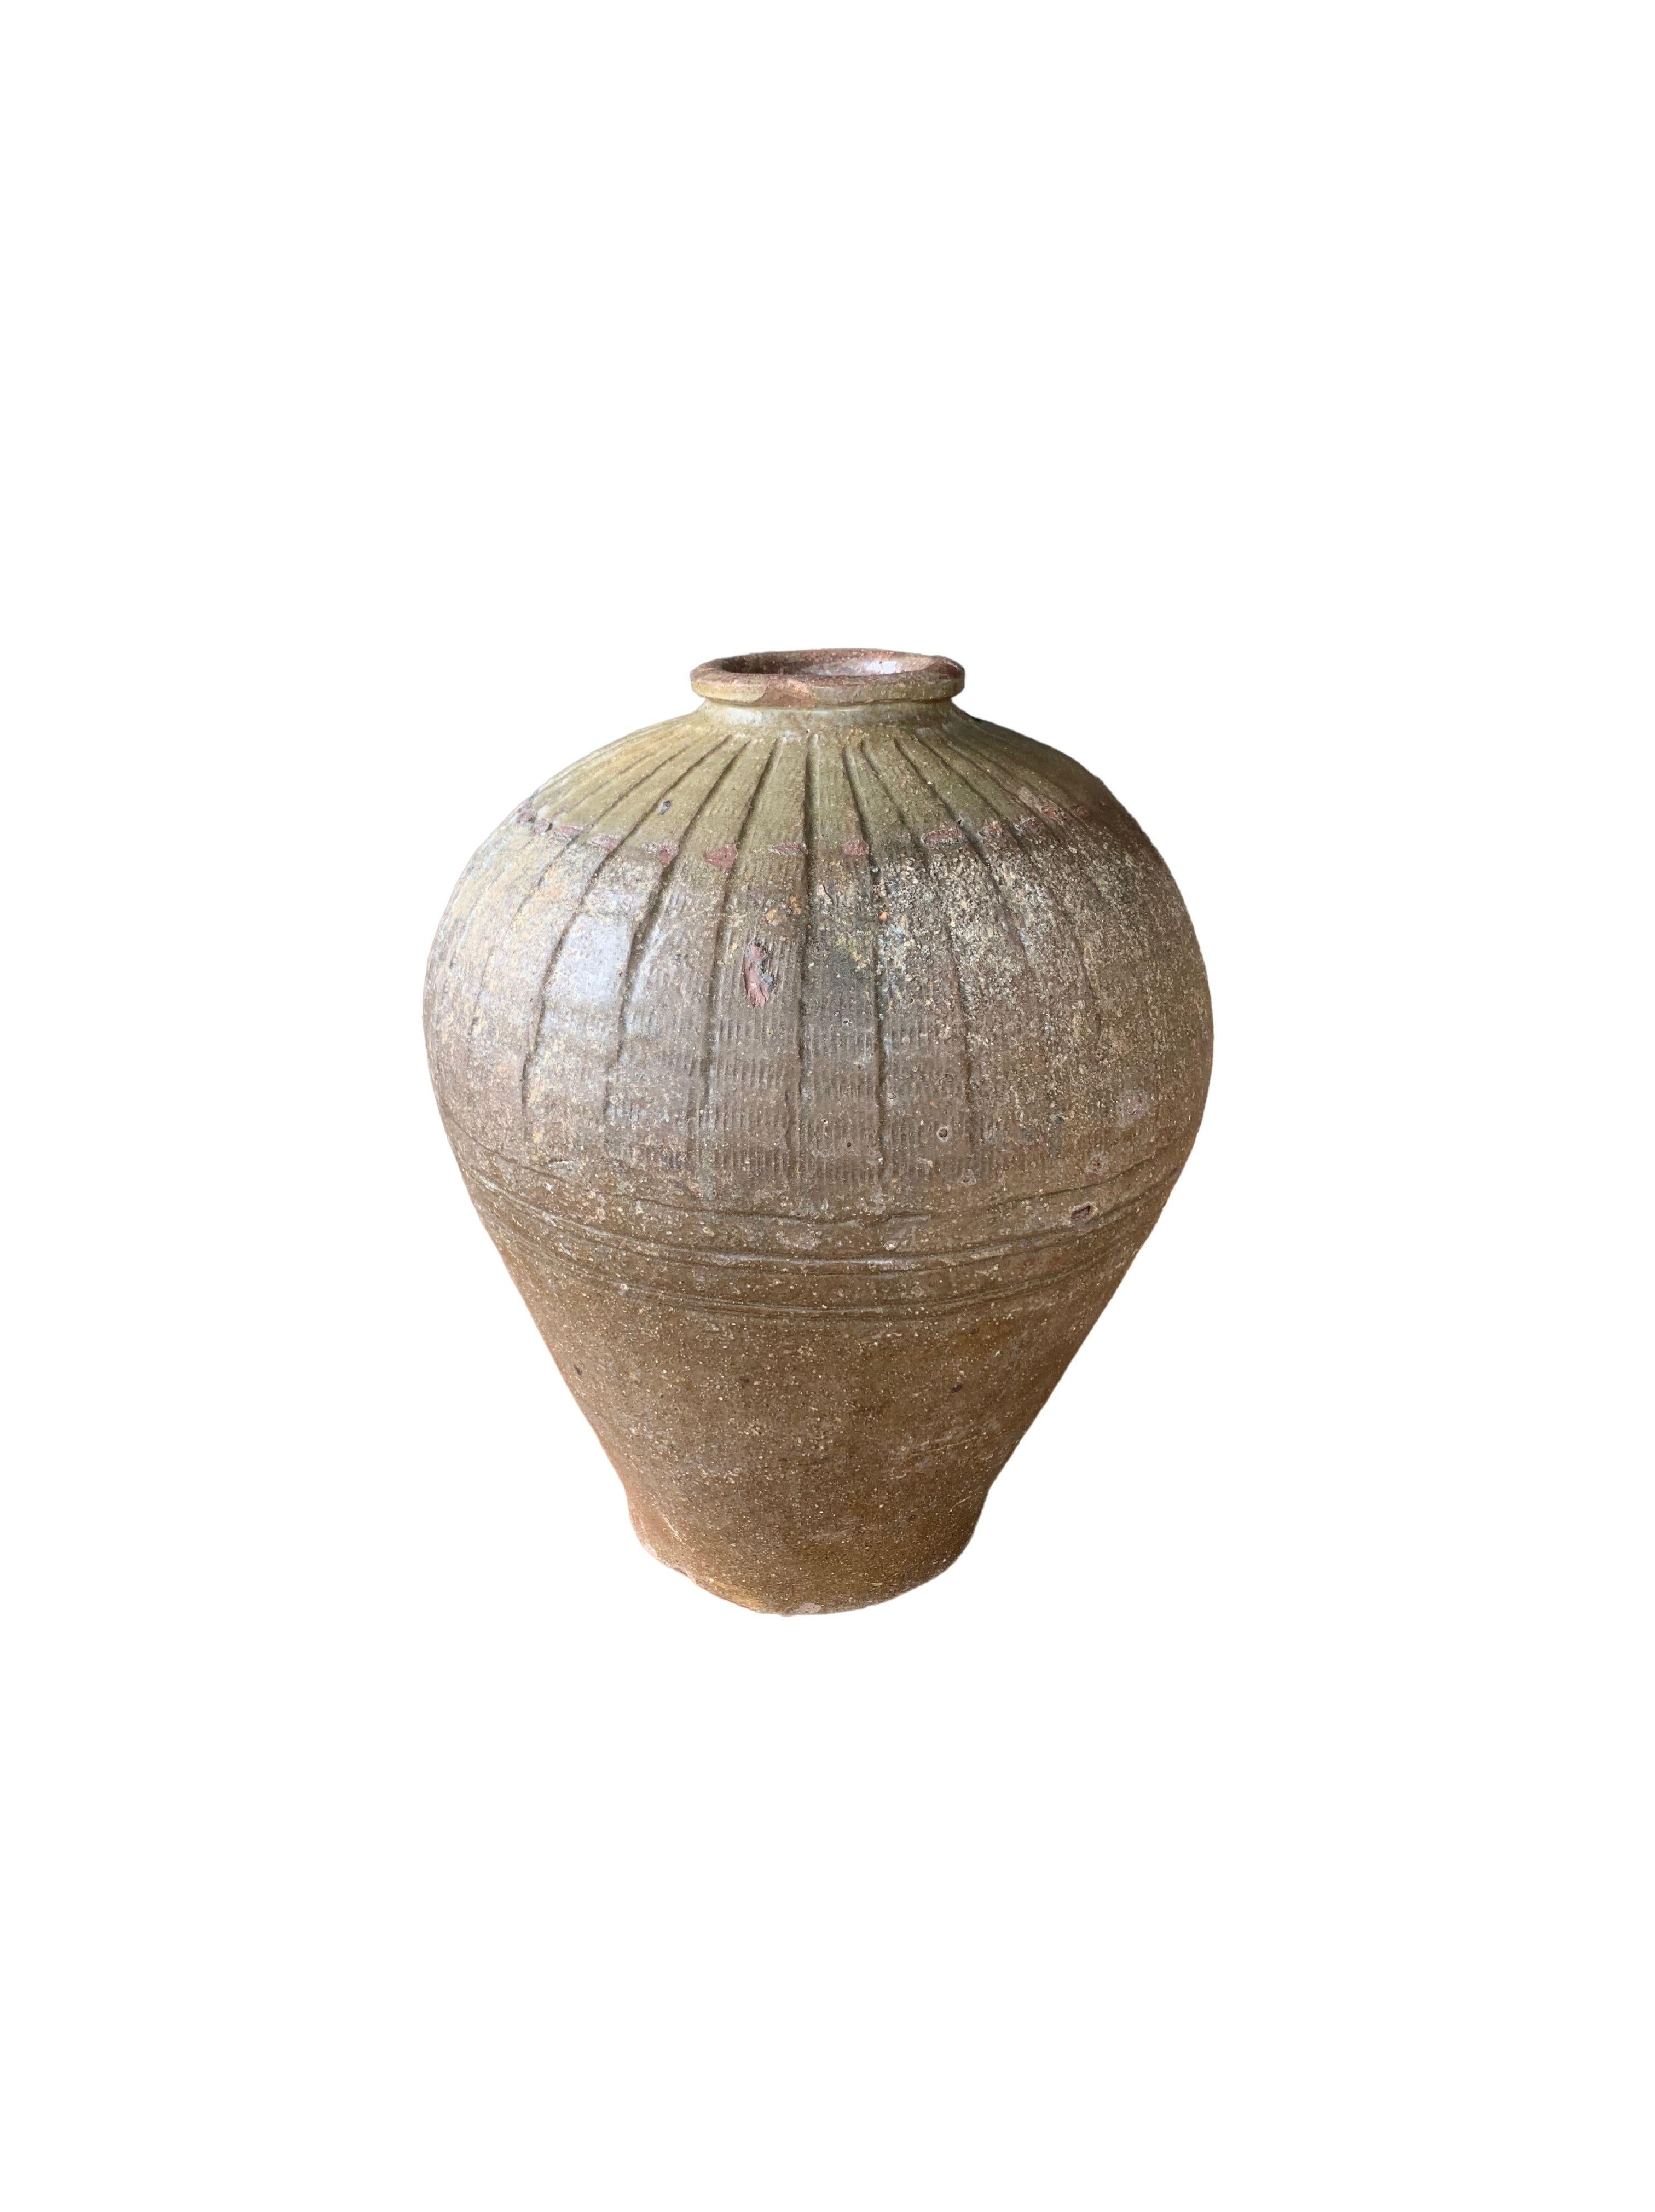 Antique Chinese Ceramic Pickling Jar Jade Green, c. 1900 In Good Condition For Sale In Jimbaran, Bali